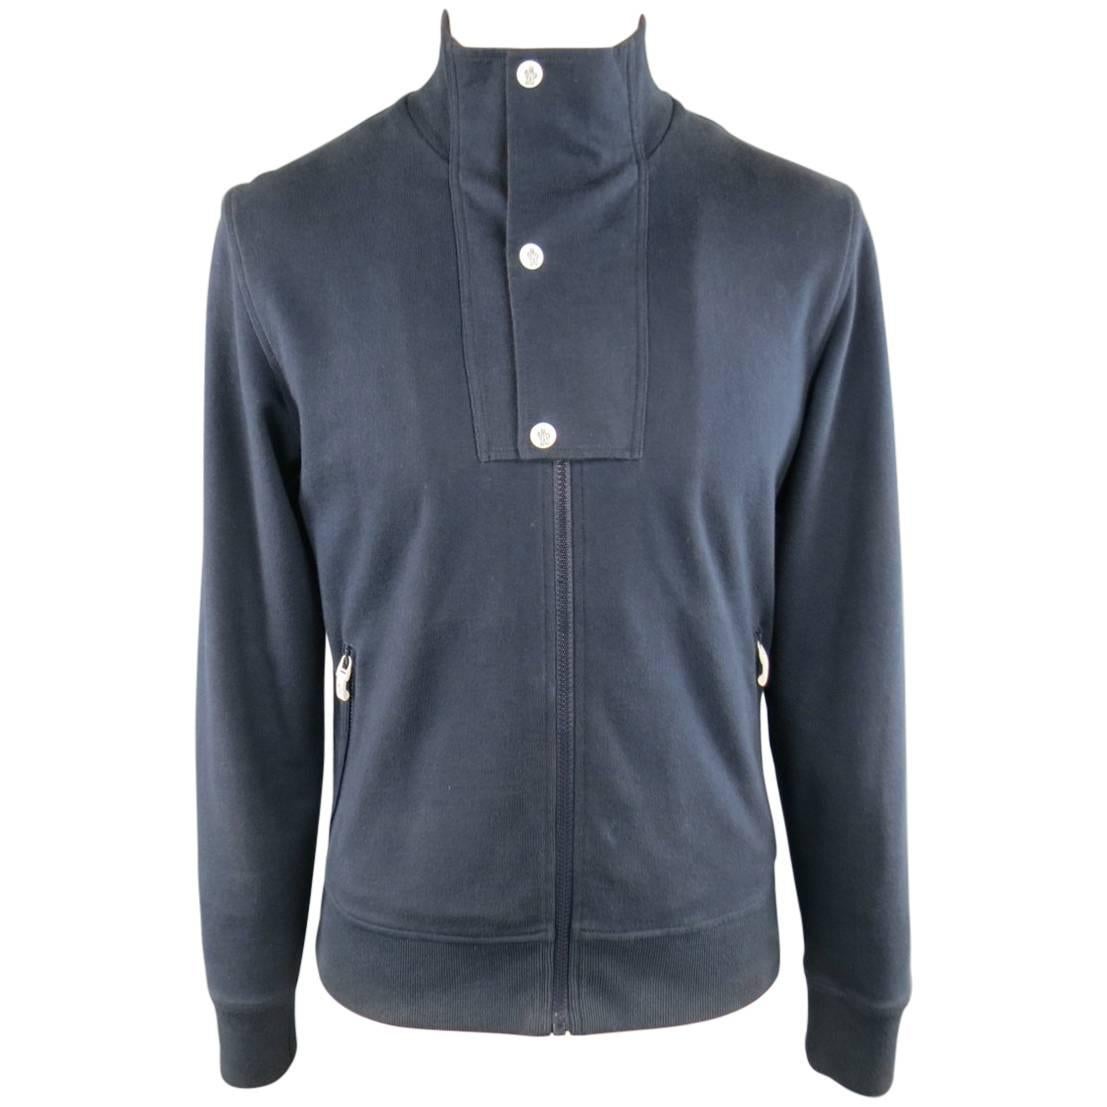 Moncler Gamme Bleu - 4 For Sale on 1stDibs | moncler gamme bleu jacket